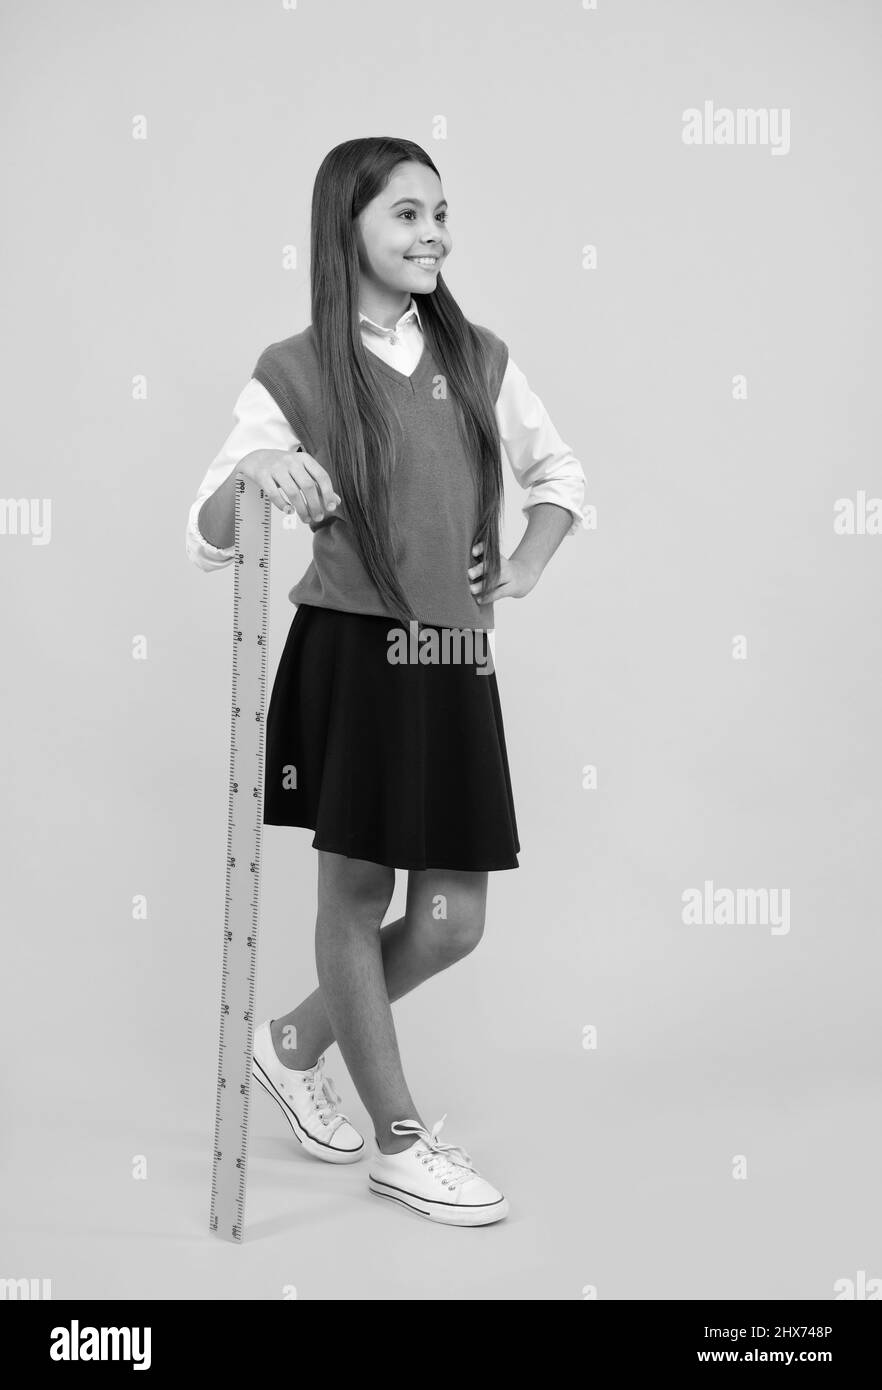 happy kid girl use ruler to learn mathematics, measurement Stock Photo